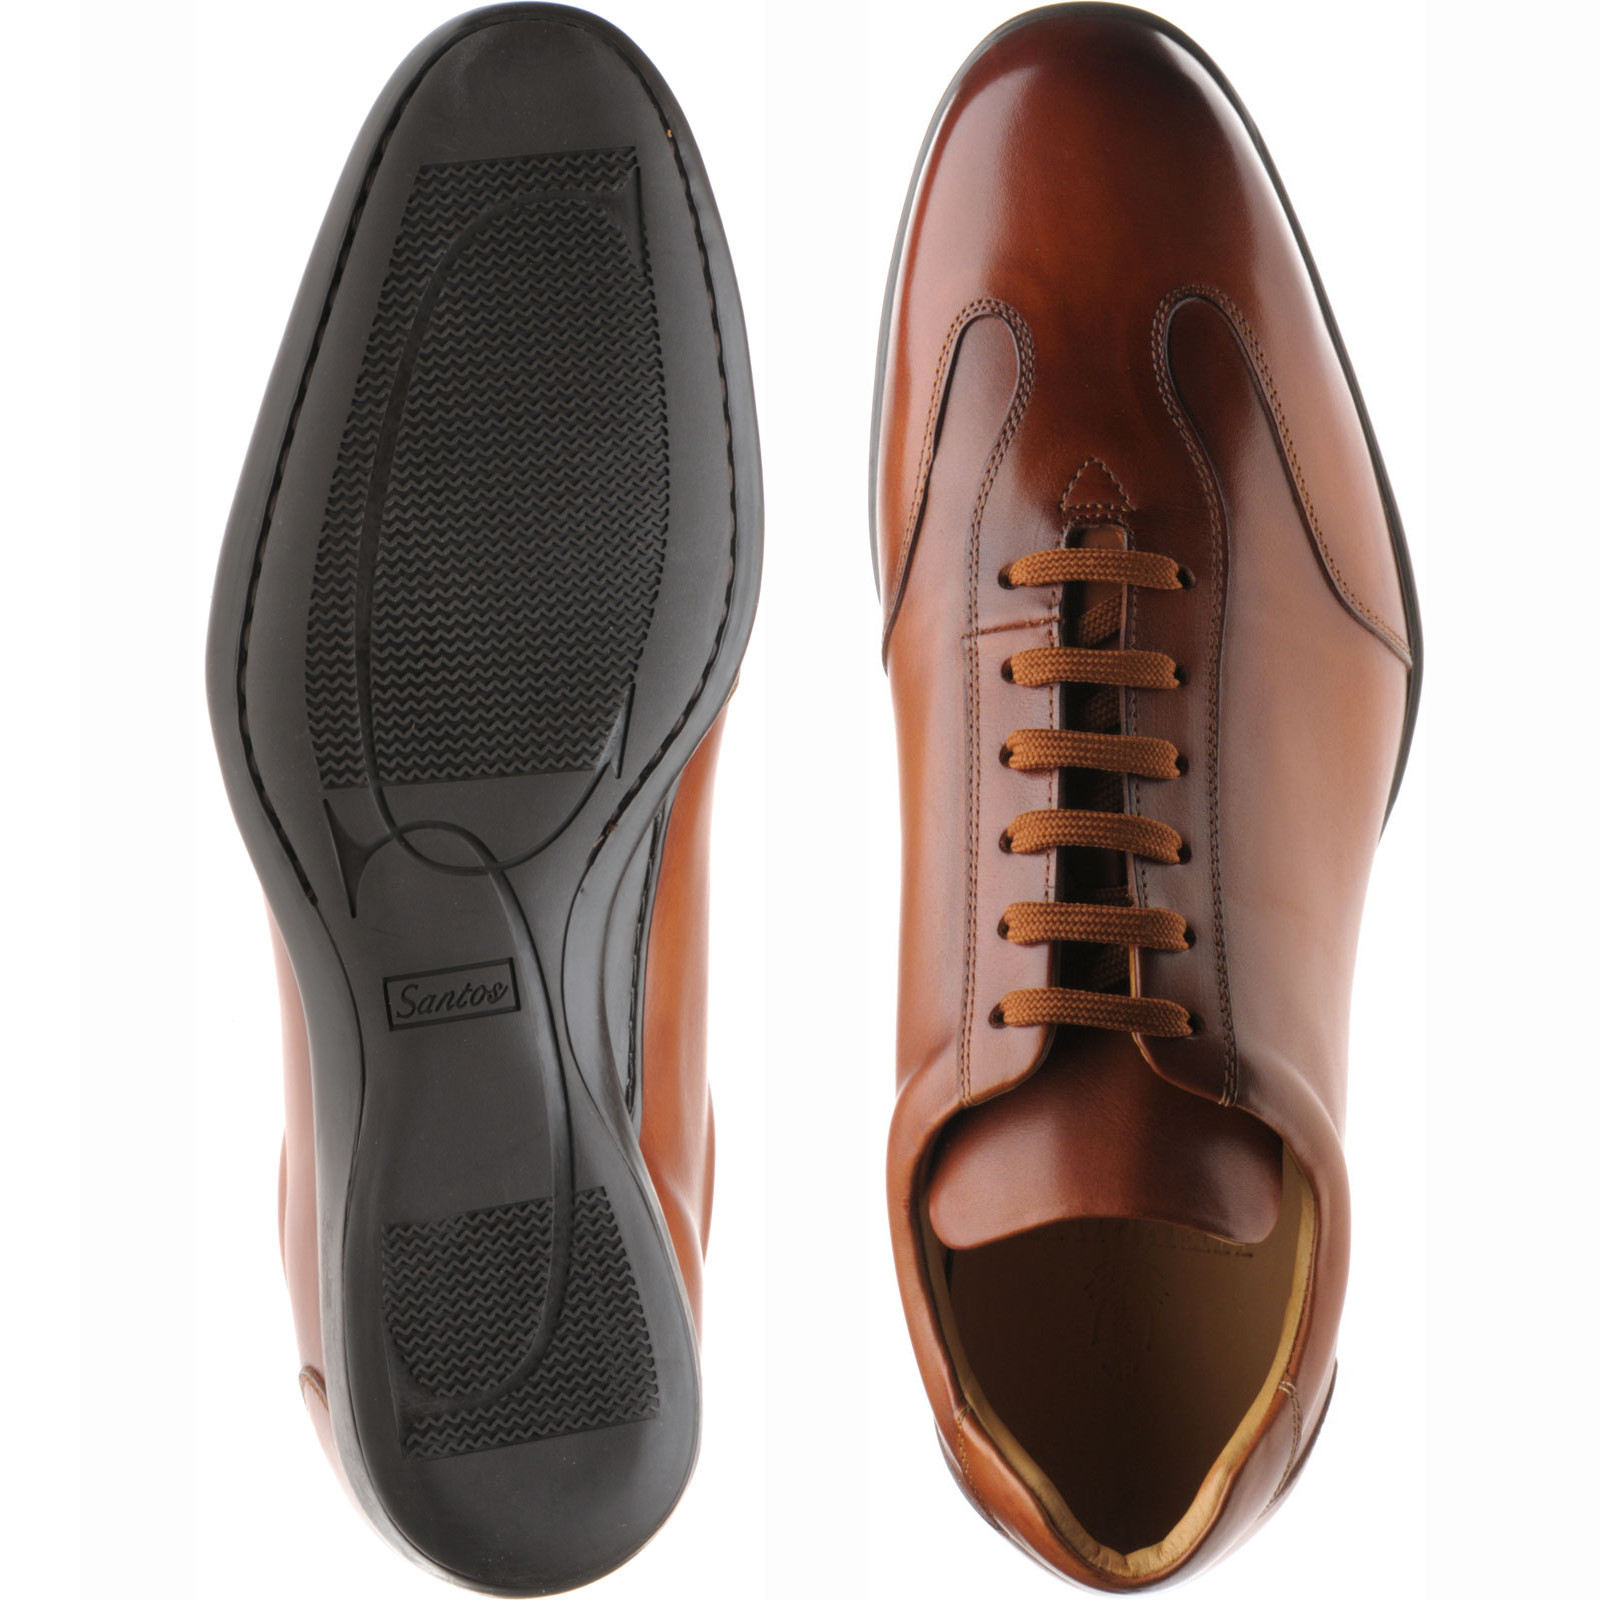 Herring shoes | Herring Classic | Duxford in Tan Calf at Herring Shoes